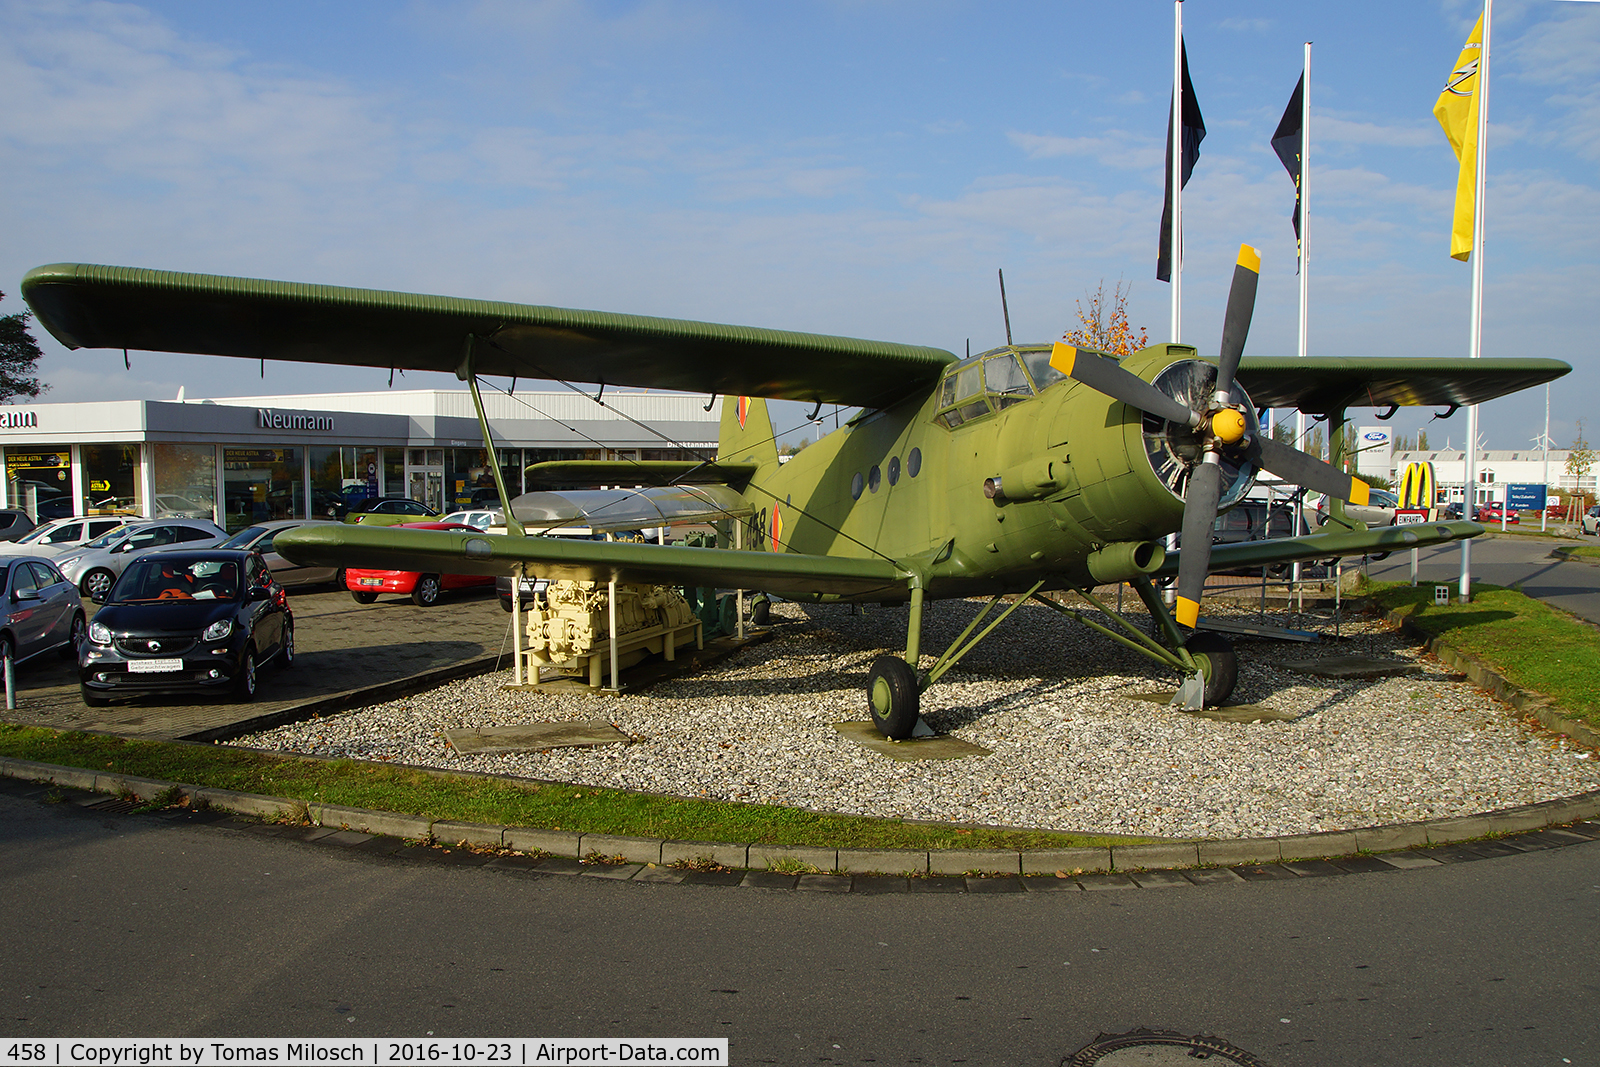 458, 1957 Antonov An-2T C/N 17807, Ex 458 (East German Air Force), ex DDR-SKI (Interflug). Displayed of a car dealer in Wolgast (North Eastern Germany) as an eye catcher.